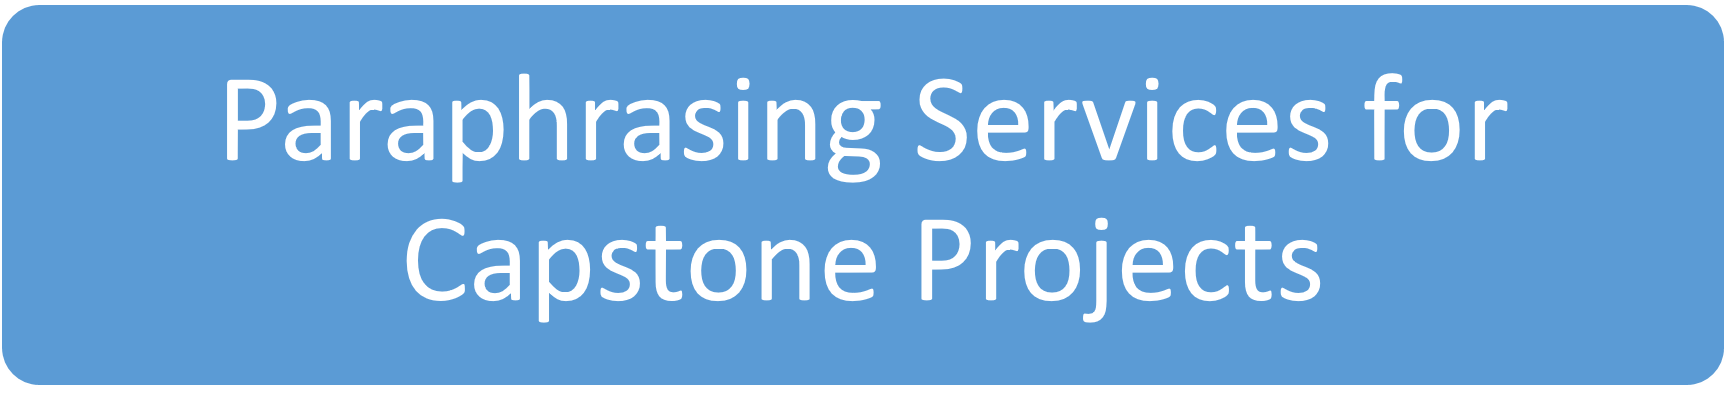 paraphrasing services capstone project